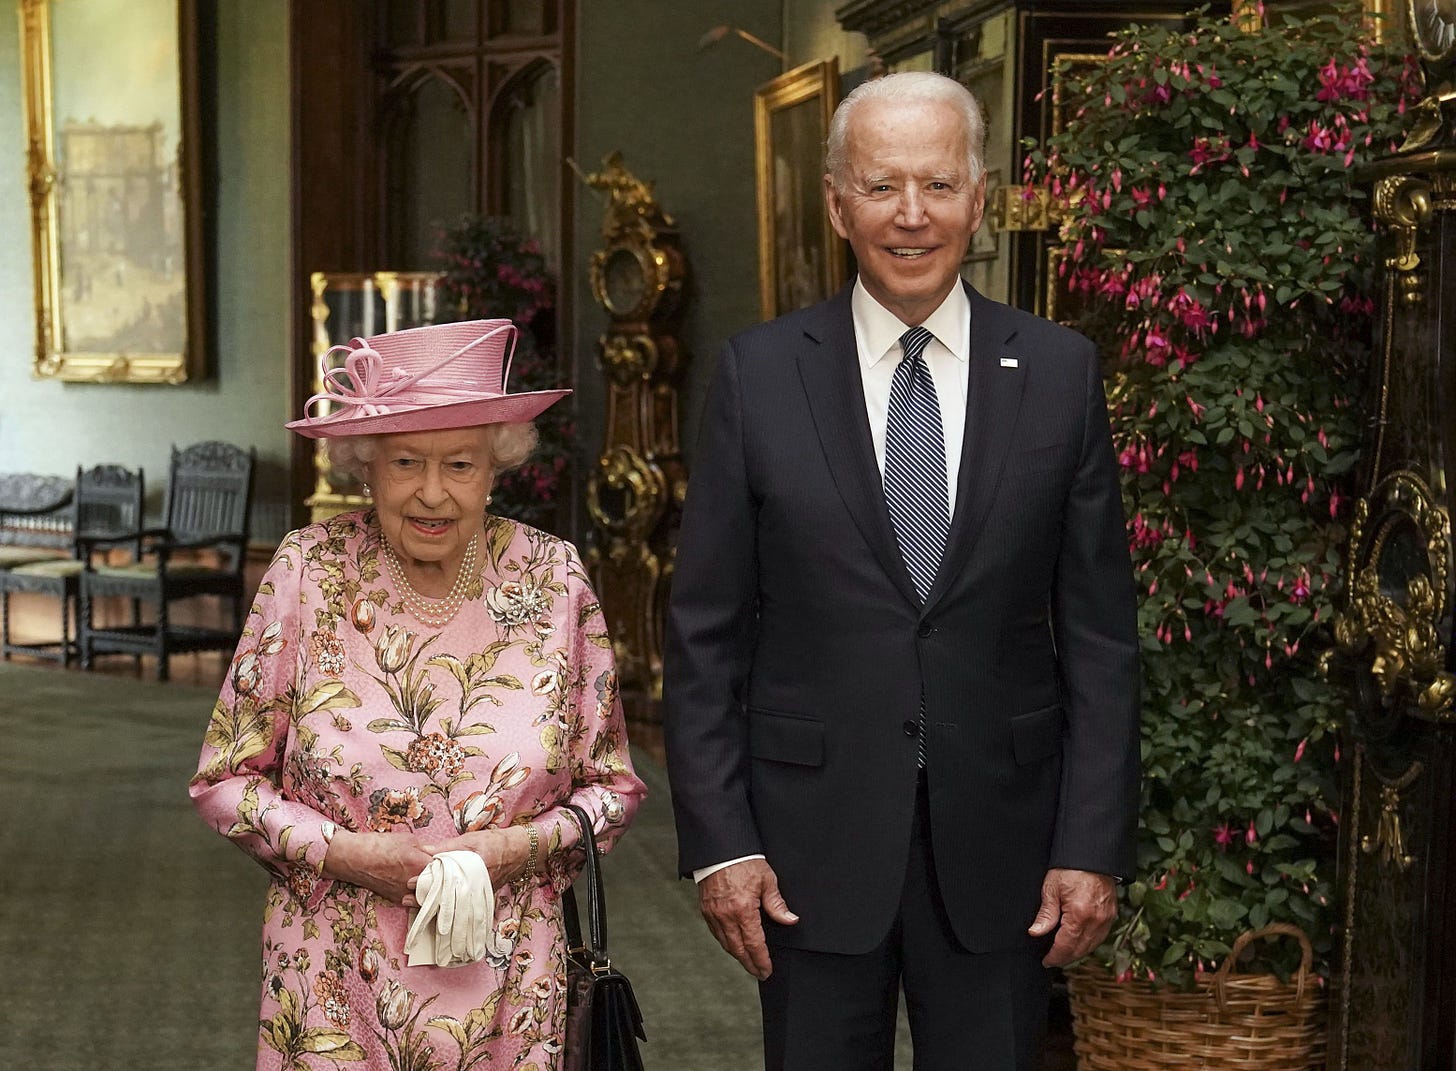 President Biden Comments on Meeting with Queen Elizabeth 2021